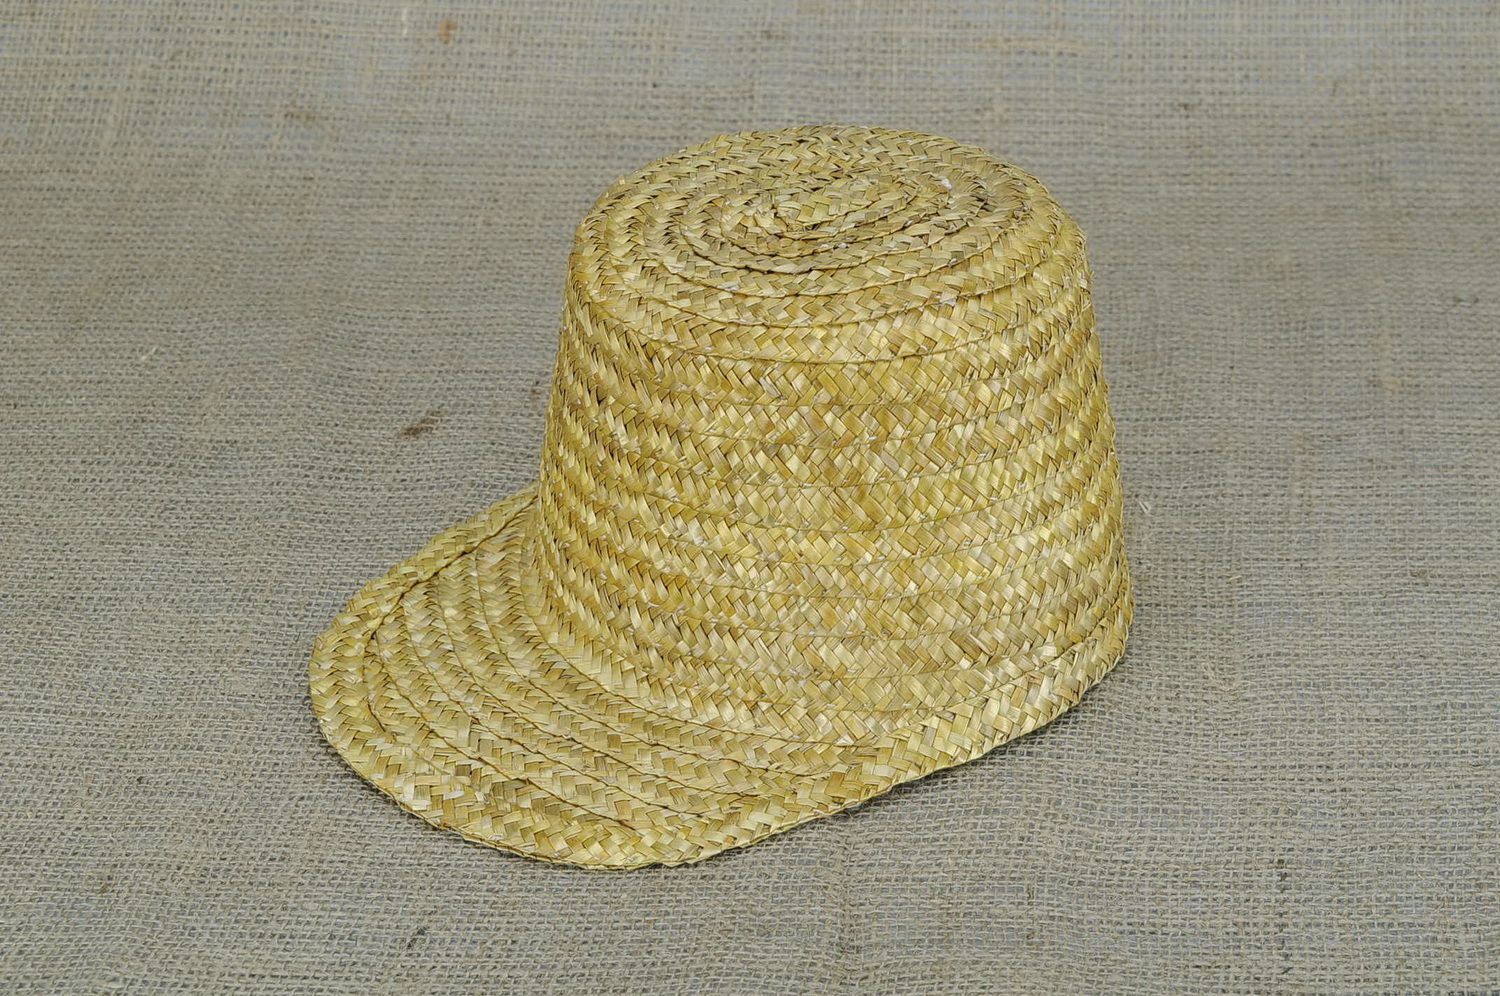 Men's peaked cap made of straw photo 2